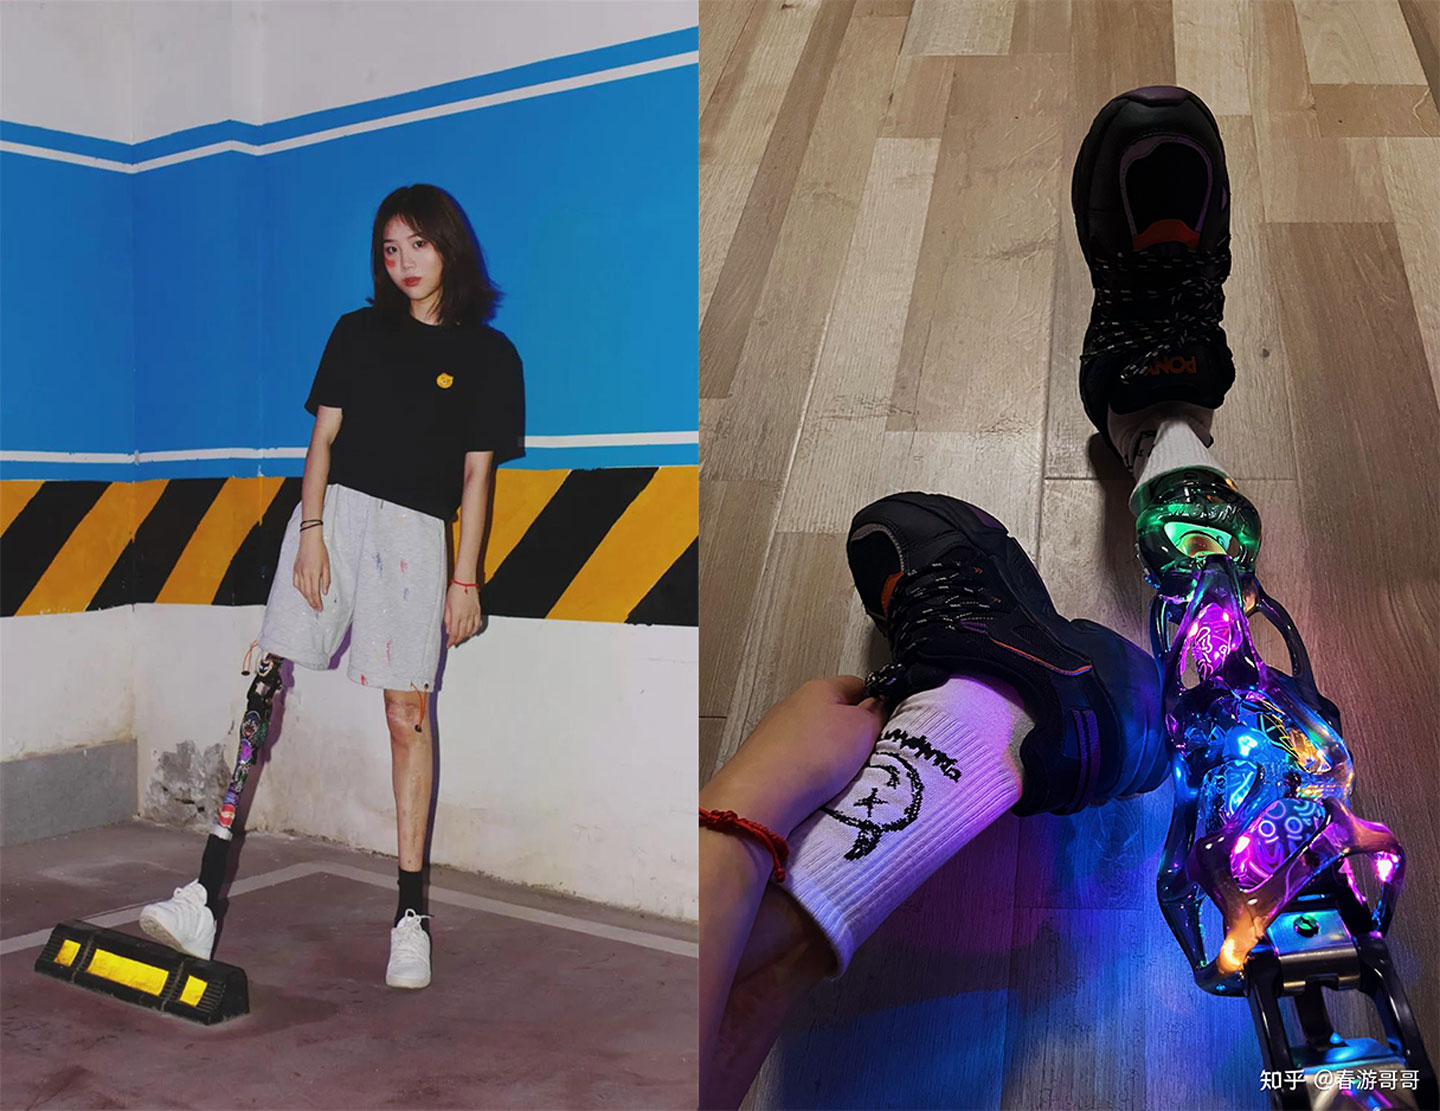 Niu Yu walked the runway at Shanghai Fashion Week last year wearing a stylized prosthetic leg